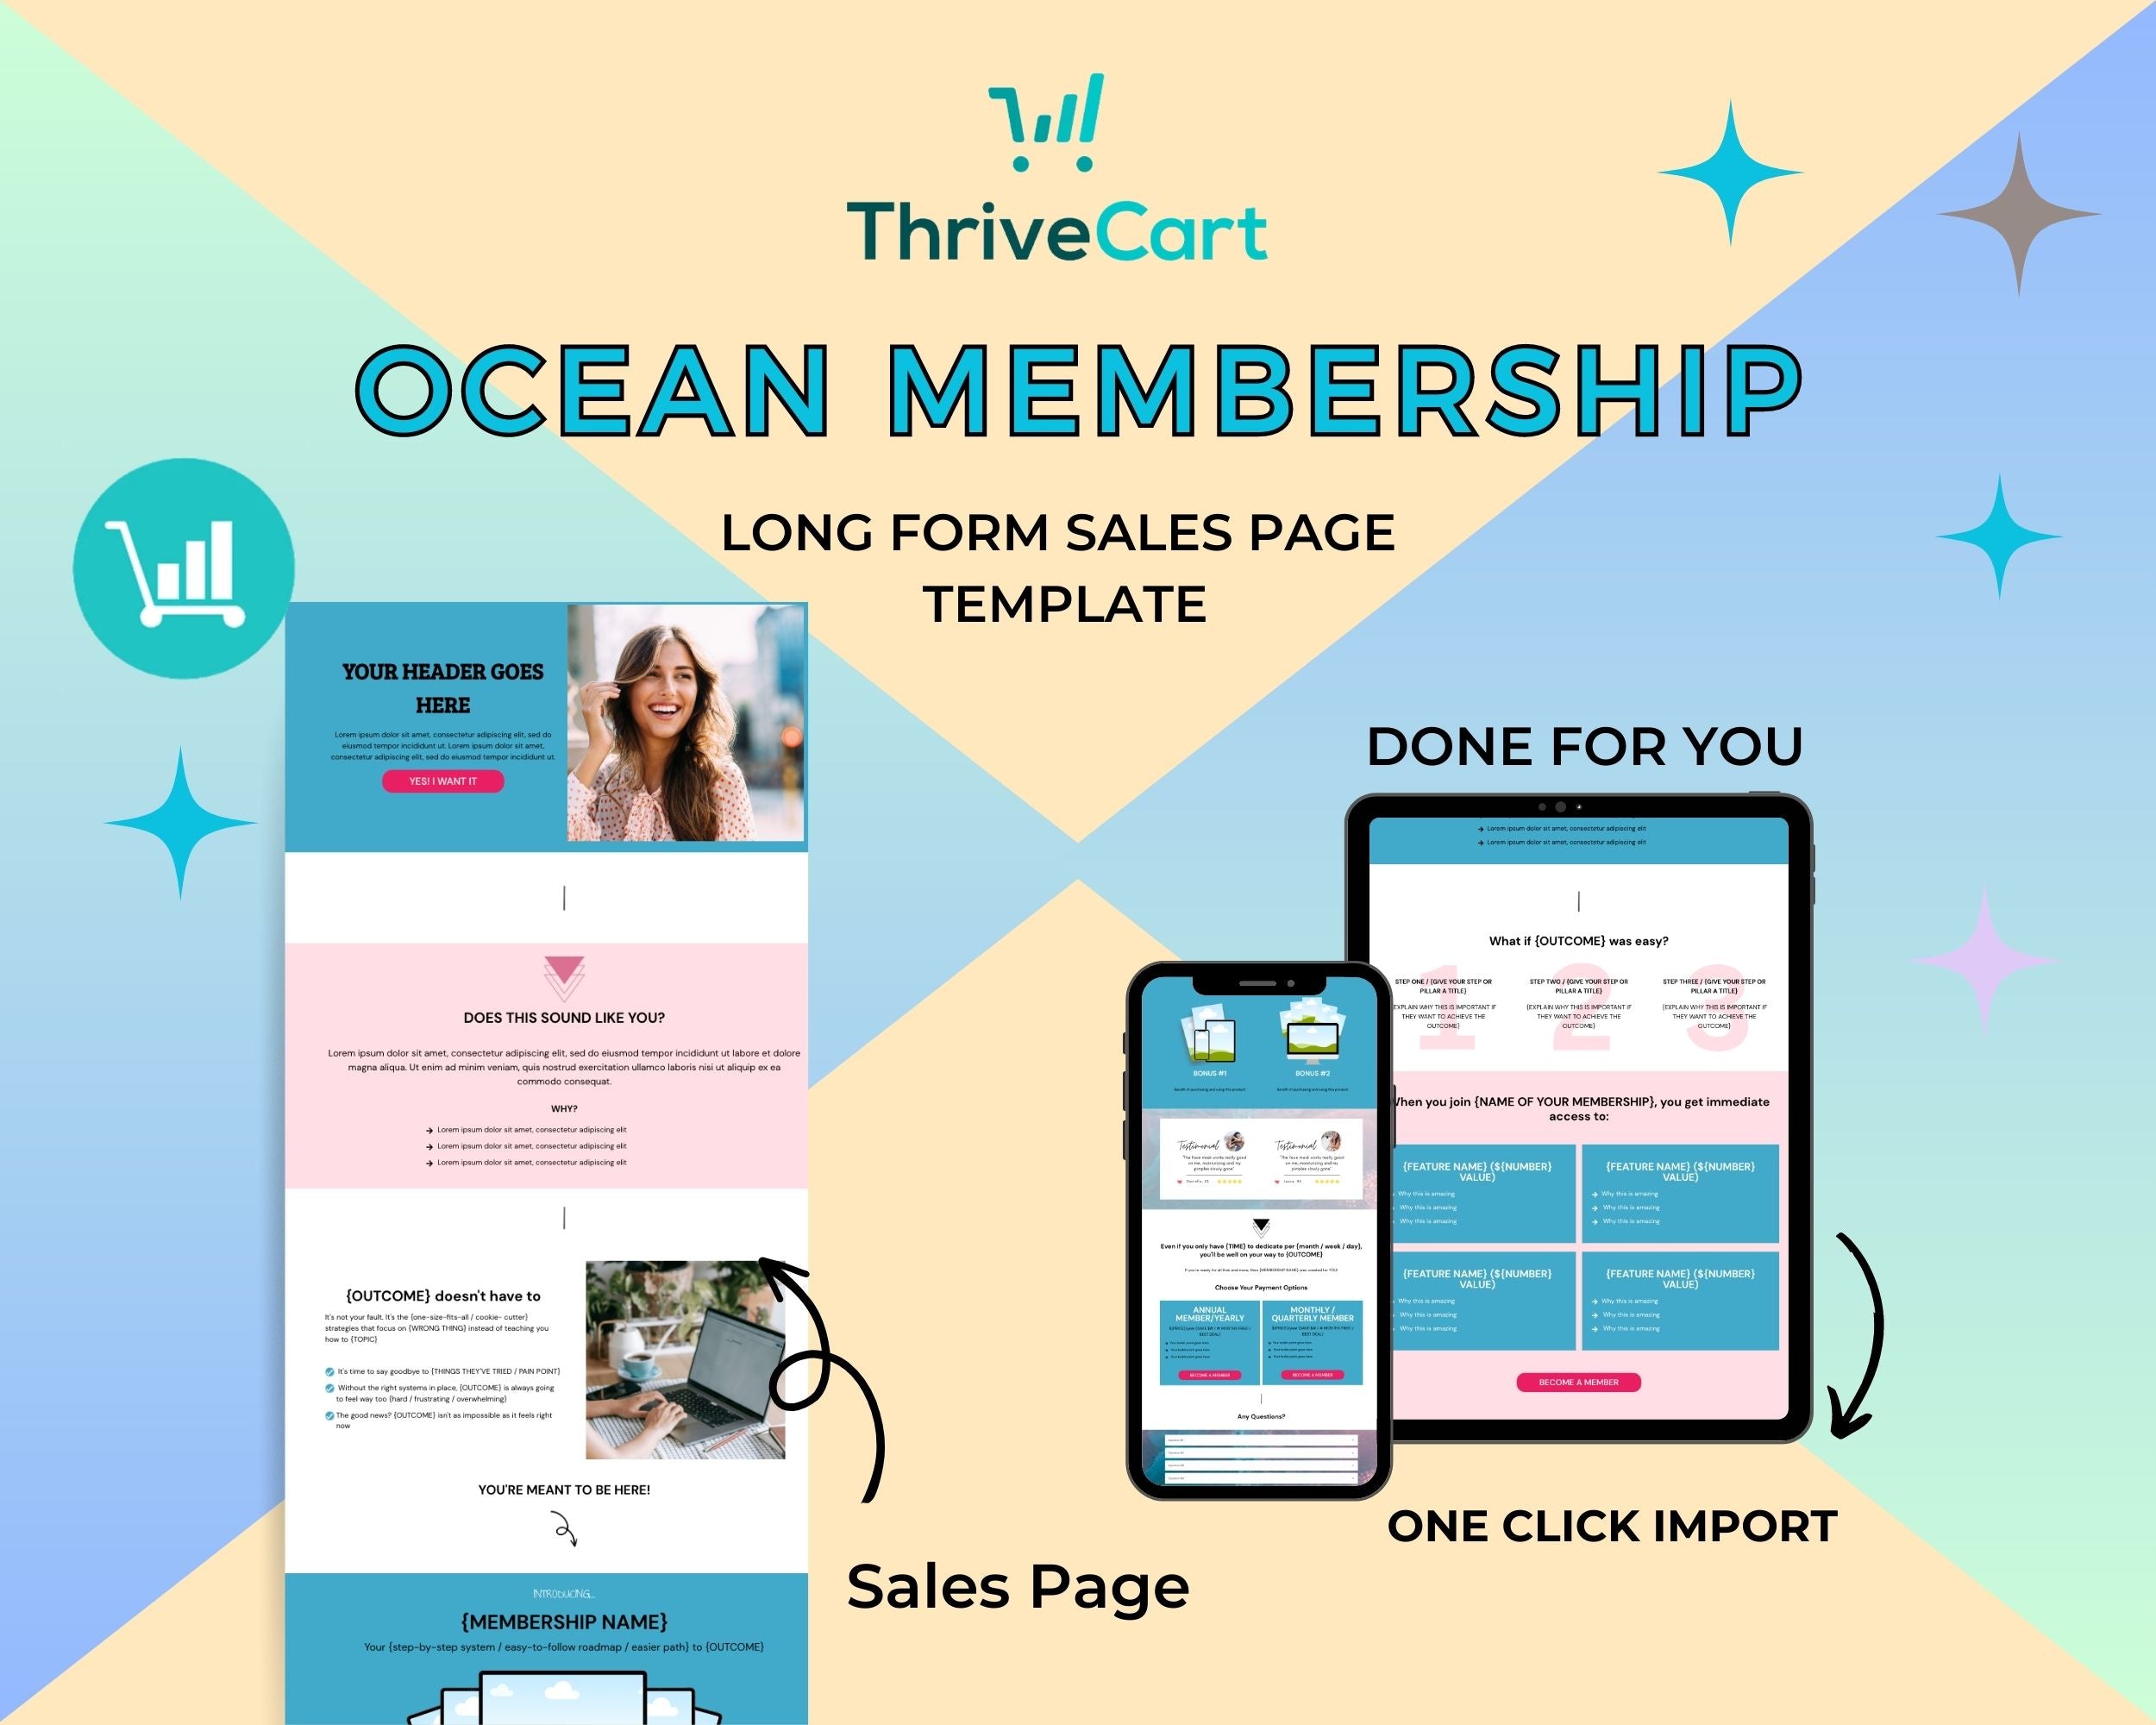 Ocean Membership Sales Page Template in Thrivecart